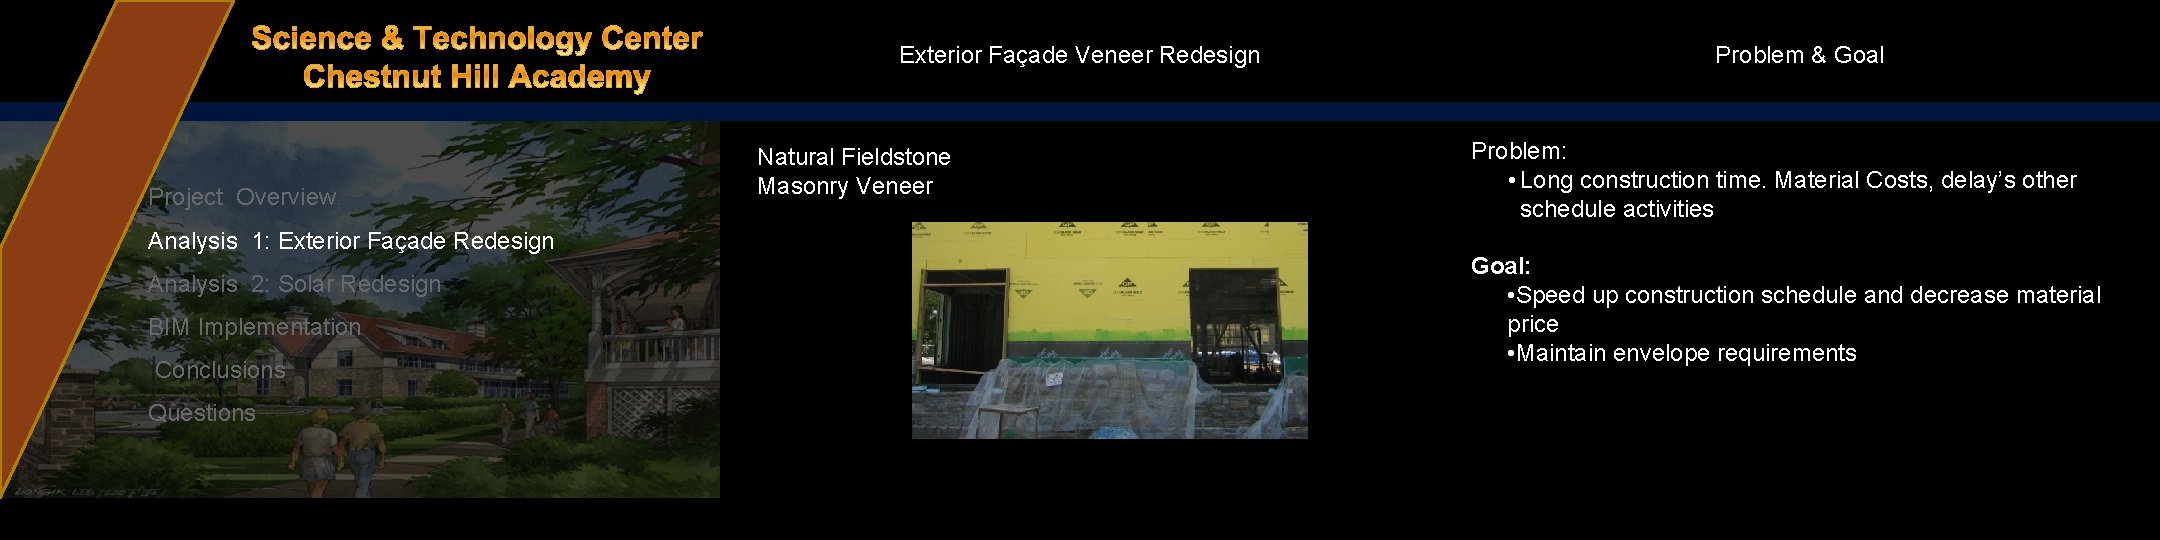 Exterior Façade Veneer Redesign Project Overview Analysis 1: Exterior Façade Redesign Analysis 2: Solar